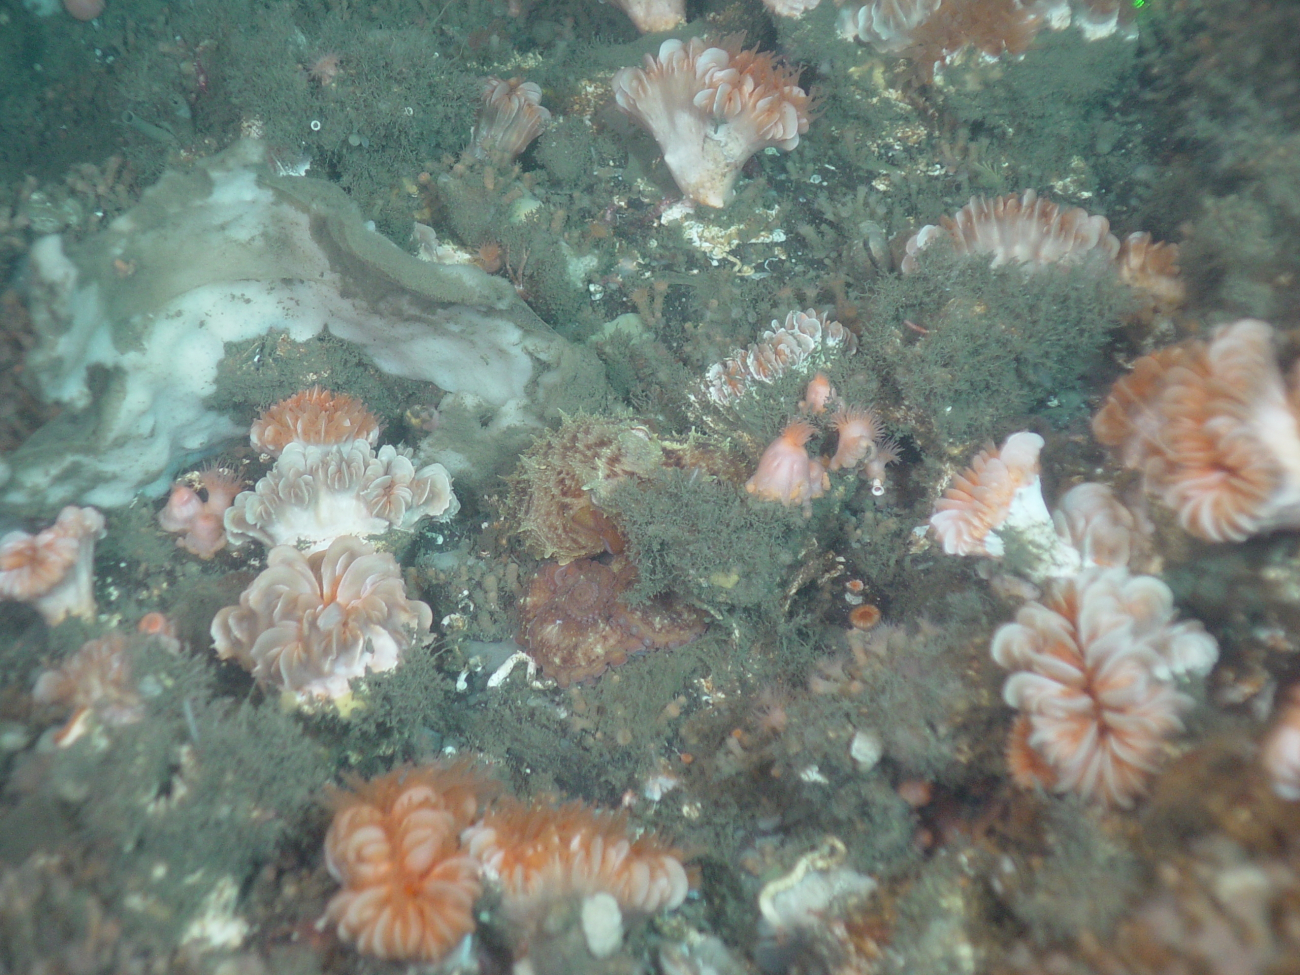 Cup corals Desmophyllum dianthus